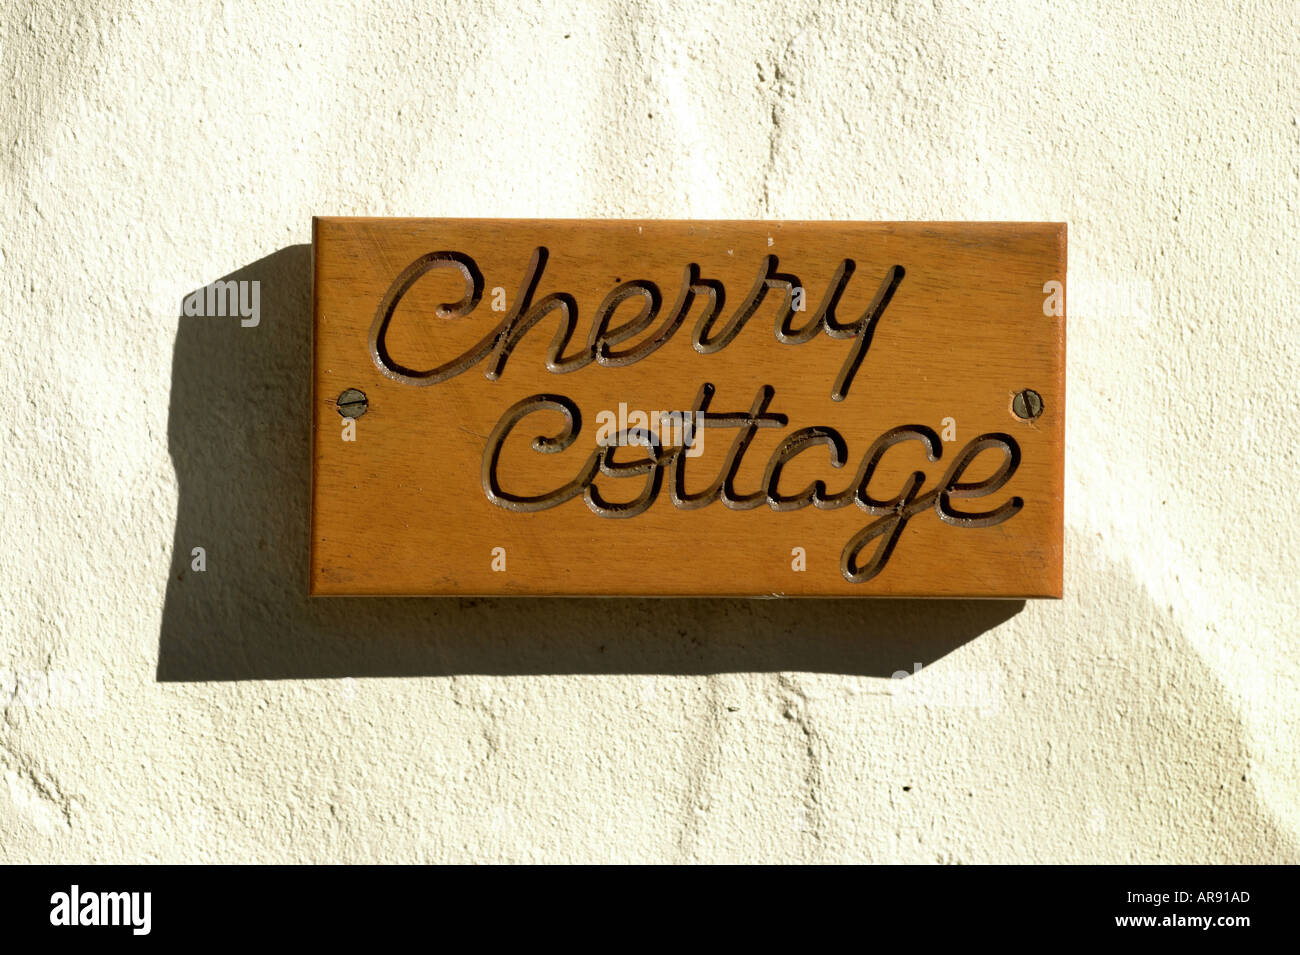 Cherry cottage house name Stock Photo